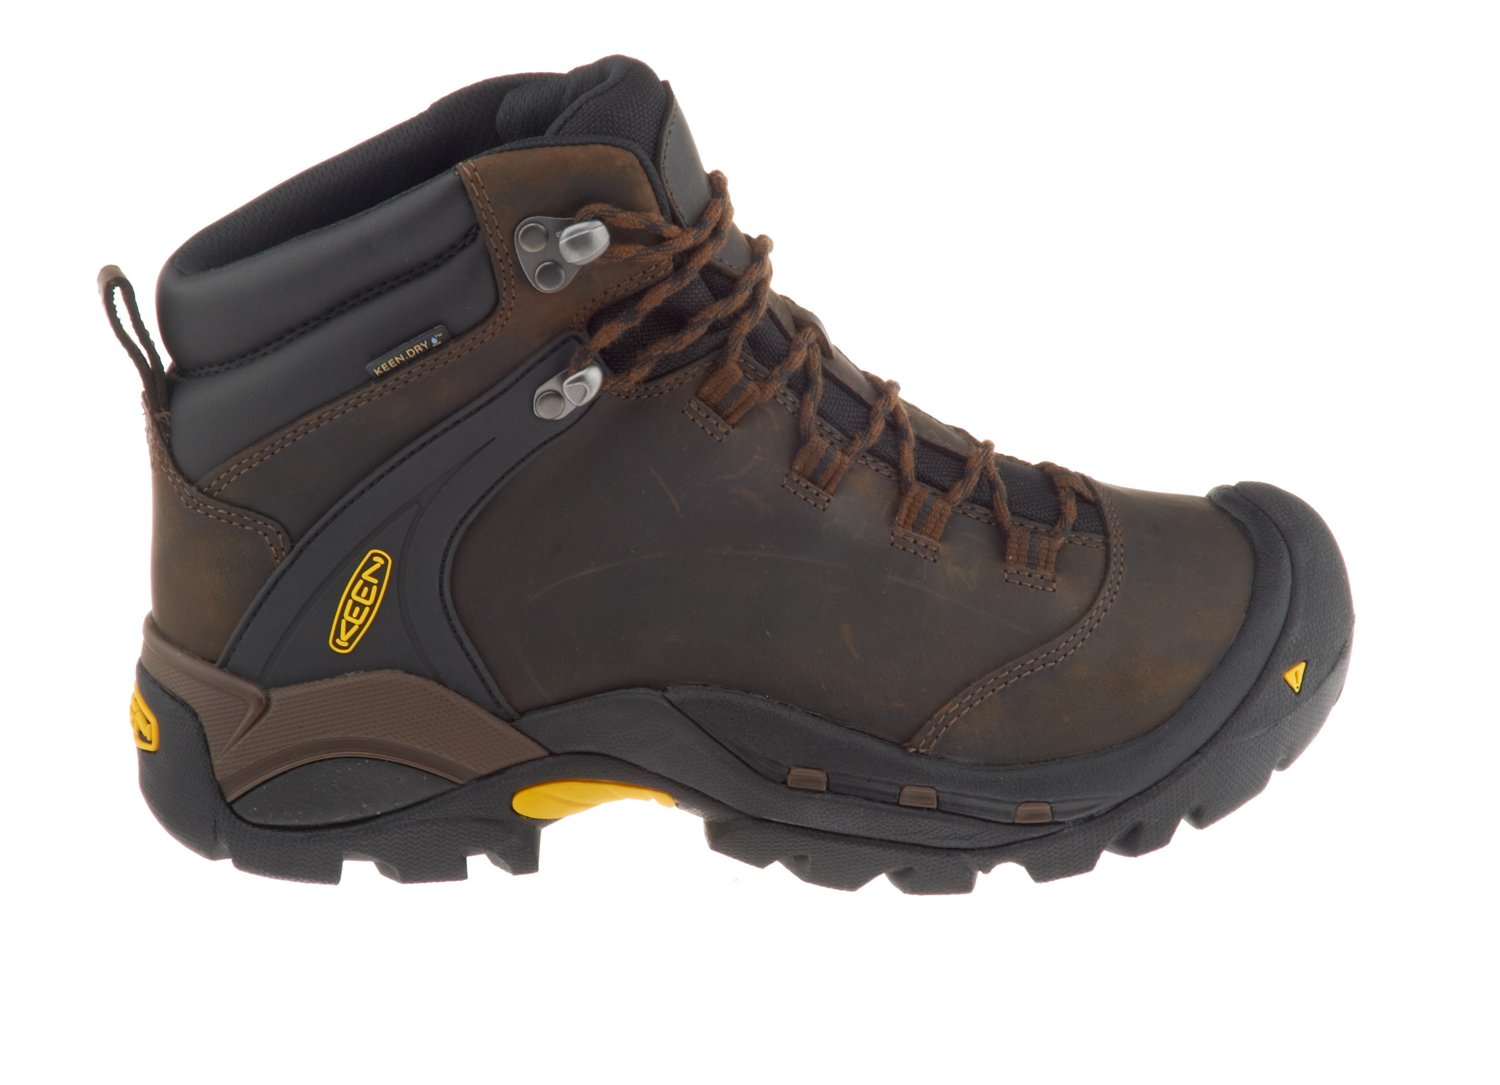 Academy - KEEN Men's Ketchum Trailhead Hiking Boots